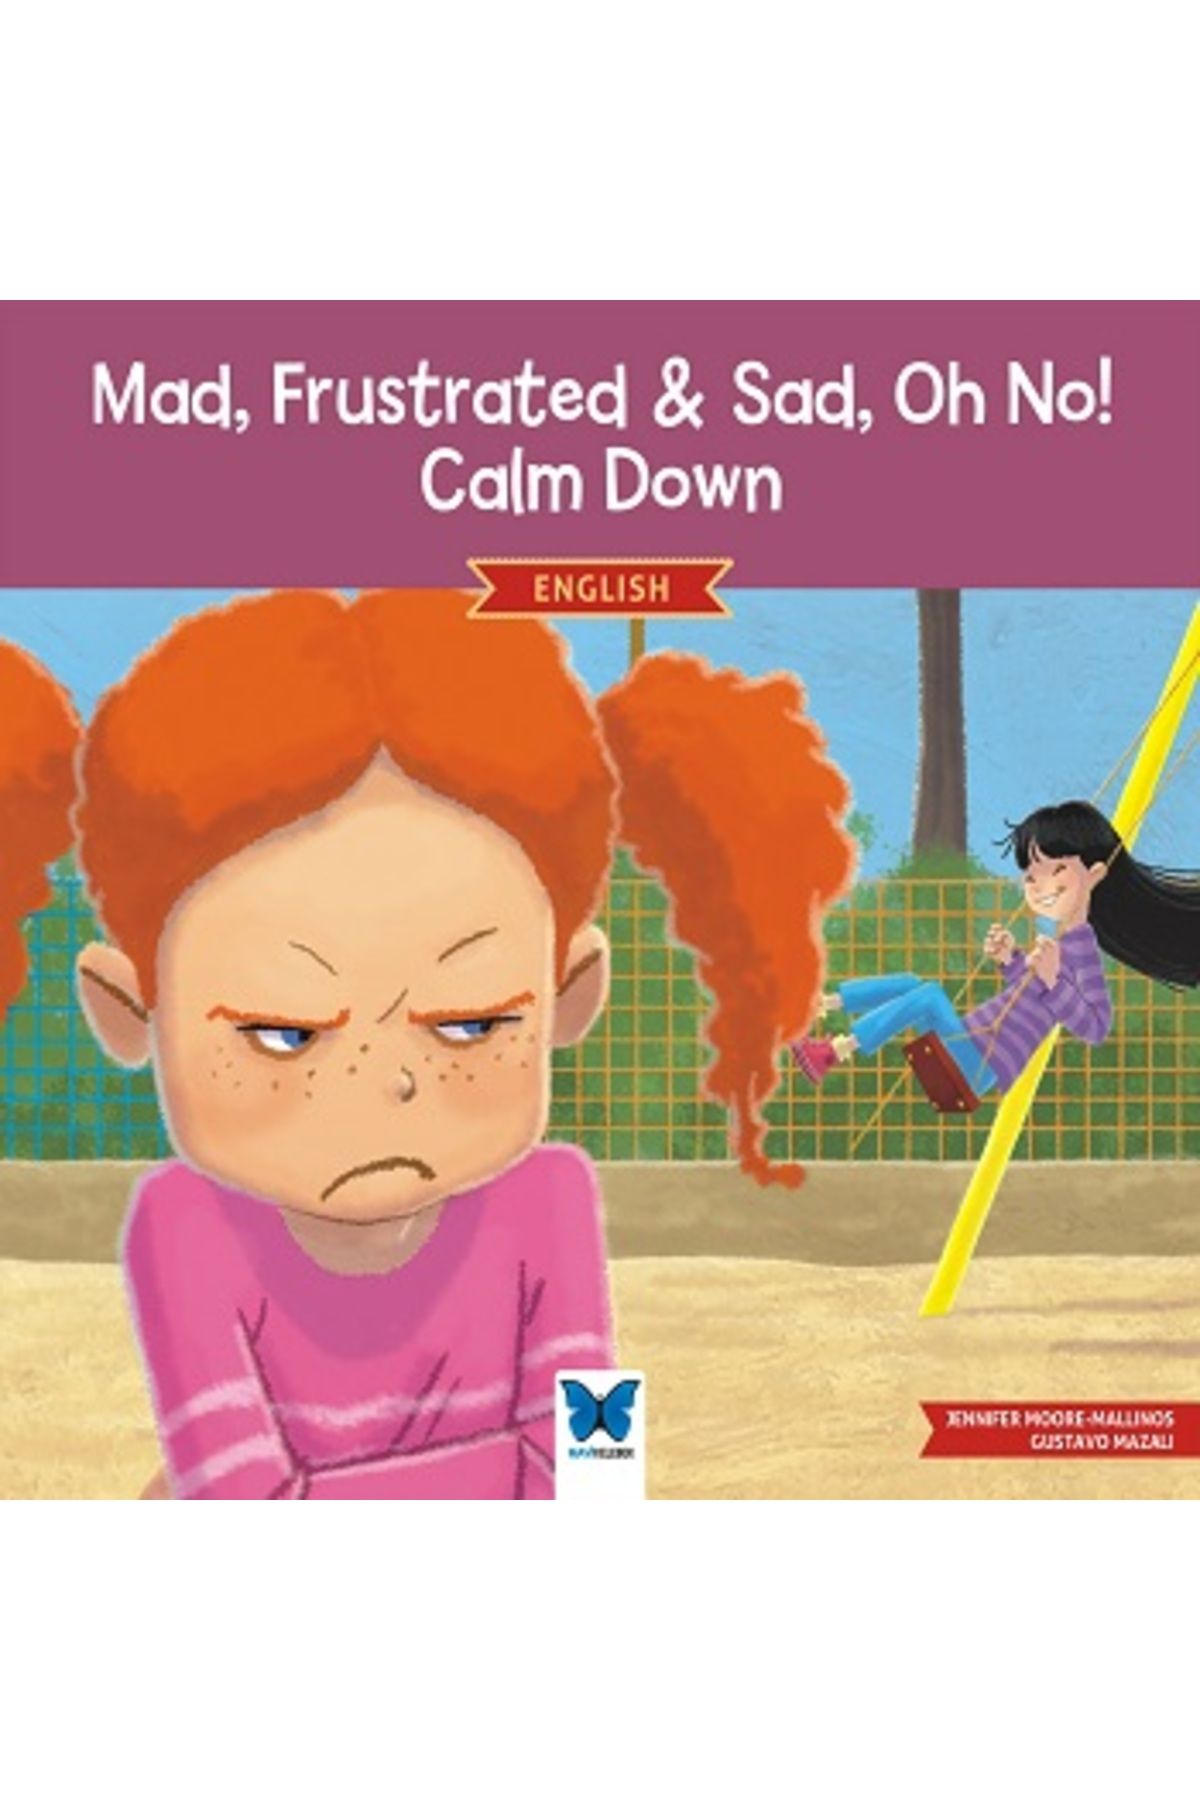 Mavi Kelebek Yayınları Mad, Frustrated & Sad, Oh No! Calm Down kitabı - Jennifer Moore-Mallinos - Mavi Kelebek Yayınları